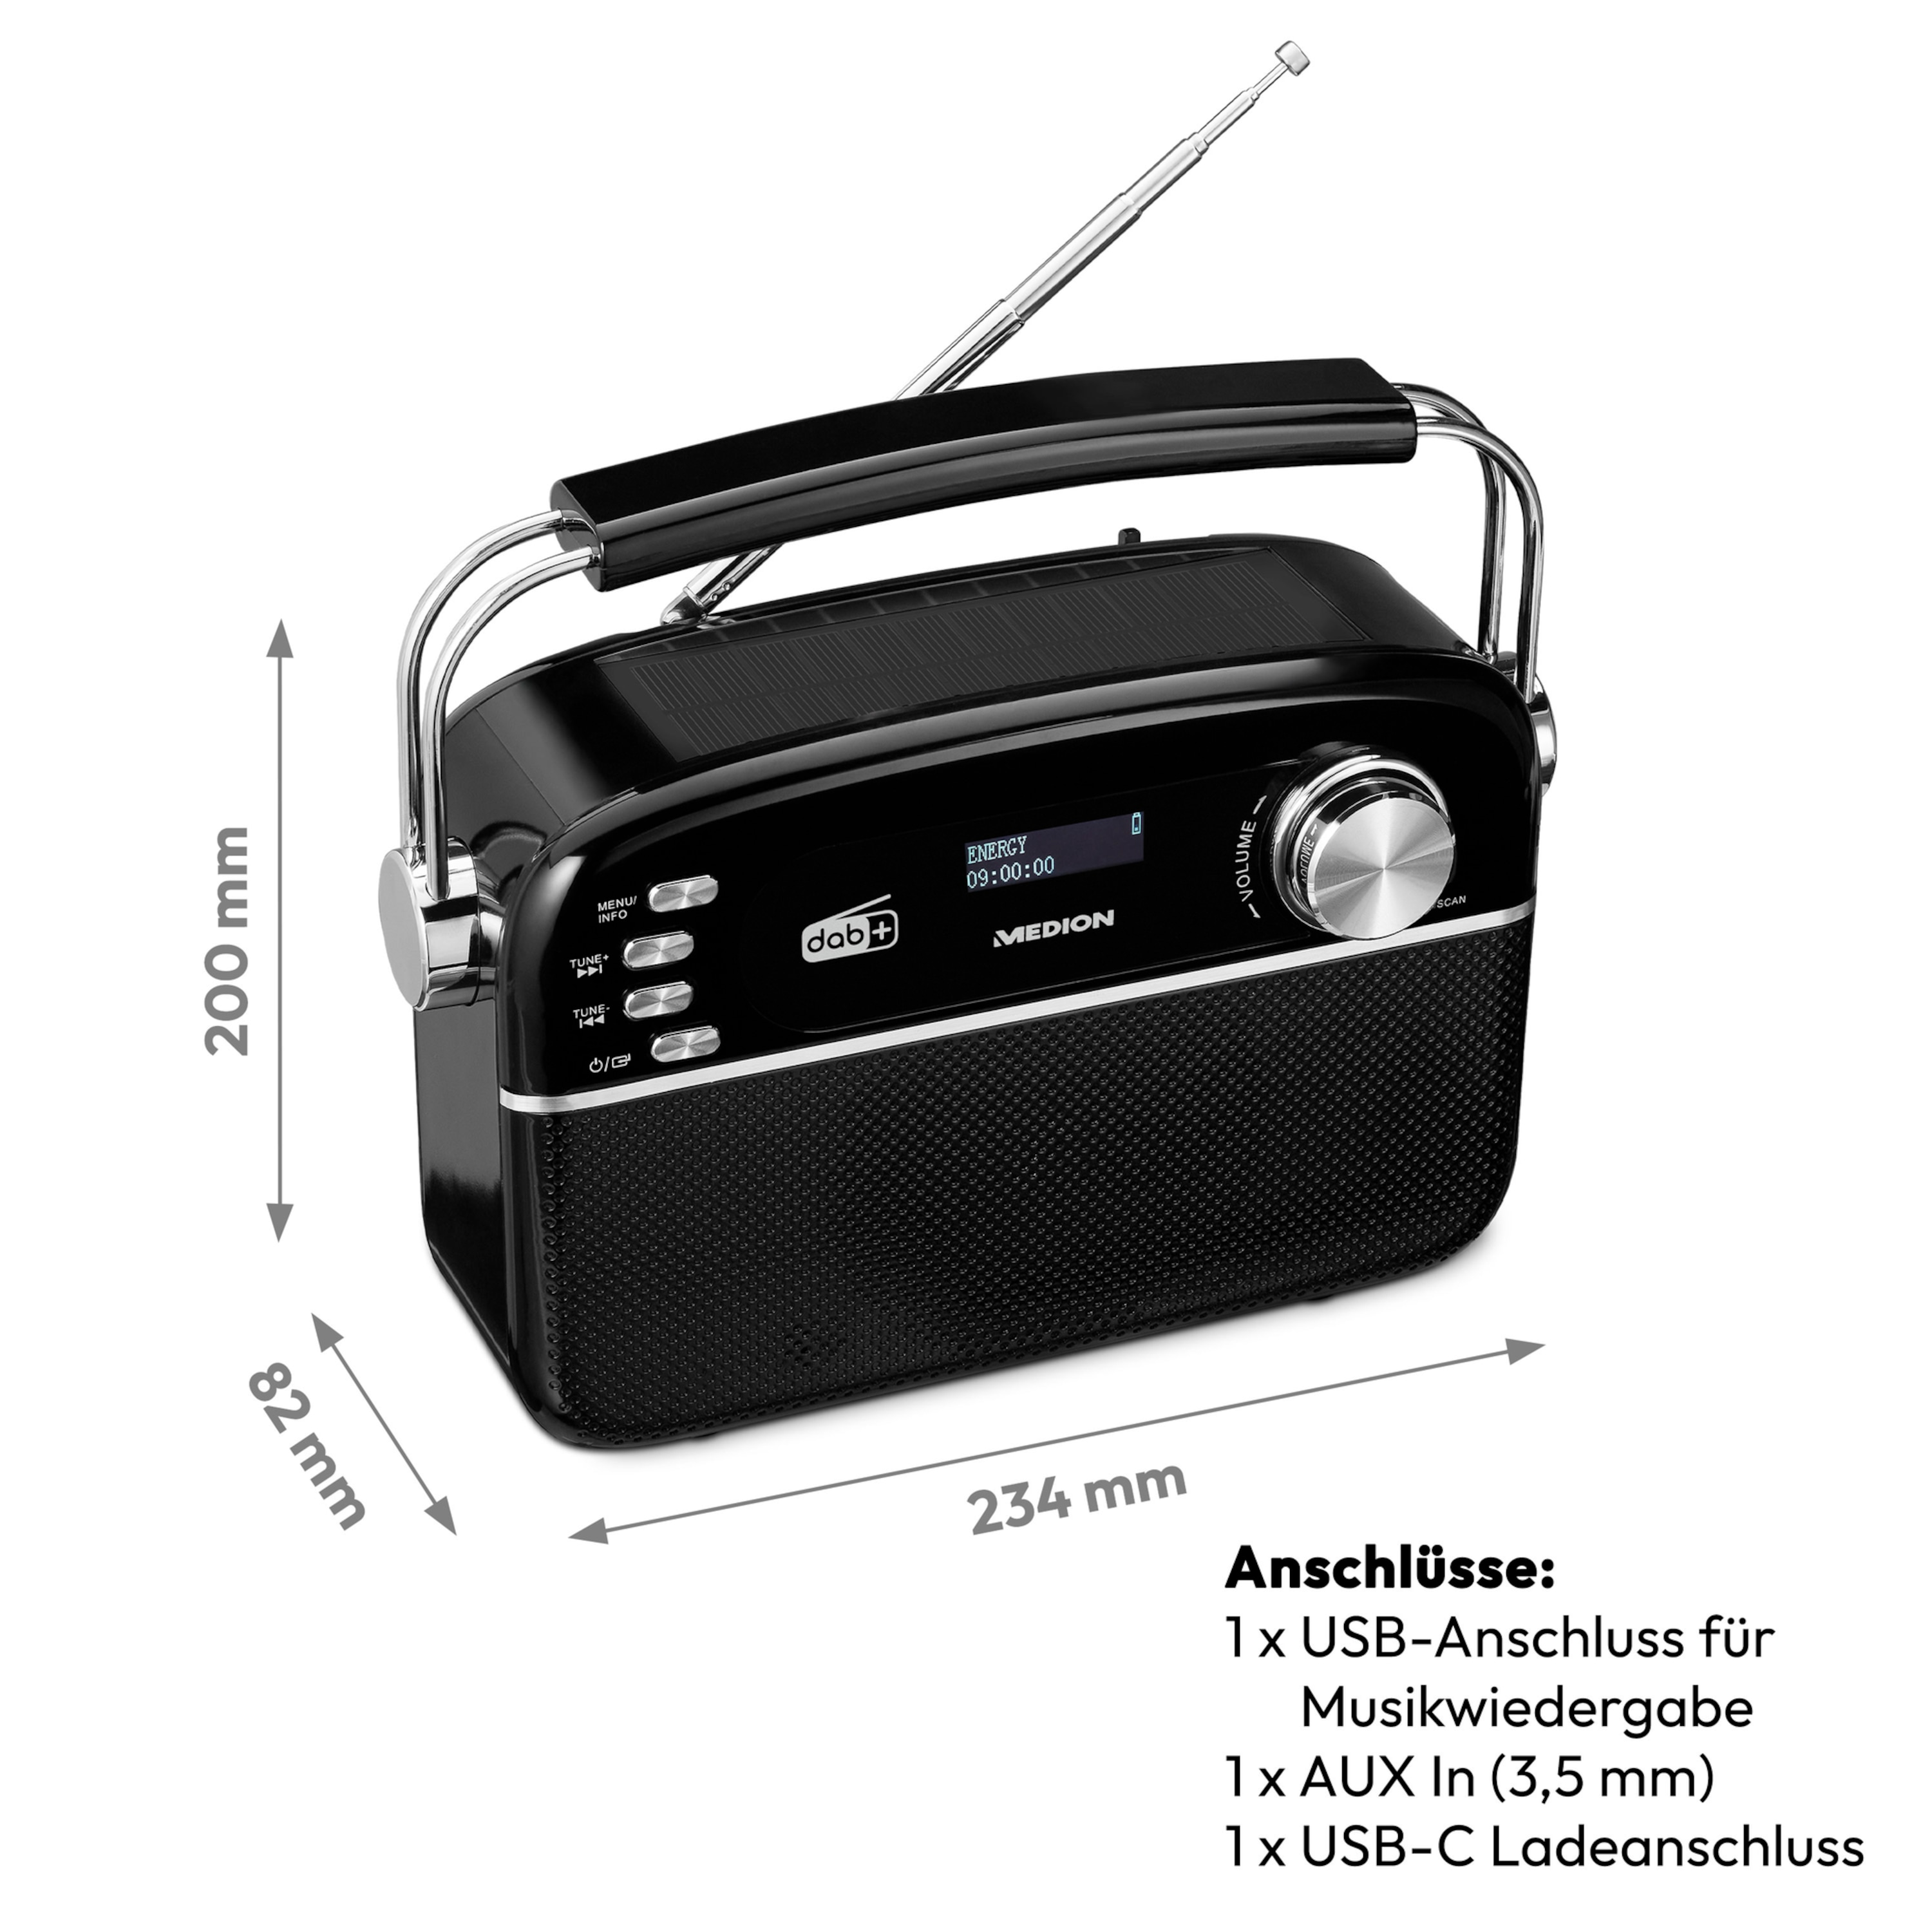 MEDION MEDION Bluetooth USB AUX schwarz Retro-Radio LIFE KW, Retro-Radio, DAB+/PLL-UKW Solarpanel schwarz E66809